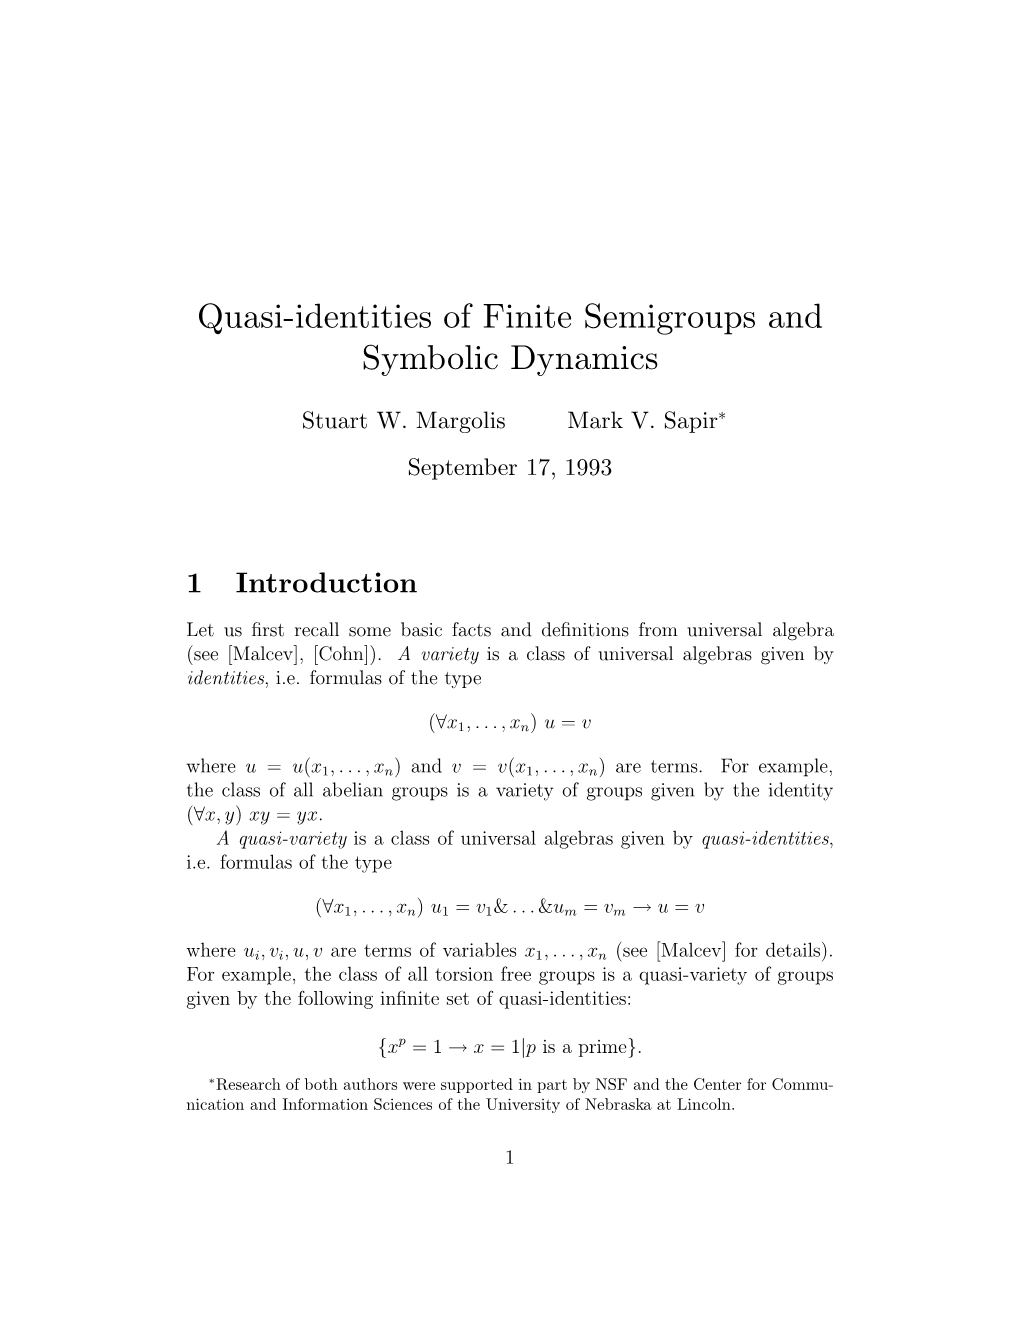 Quasi-Identities of Finite Semigroups and Symbolic Dynamics